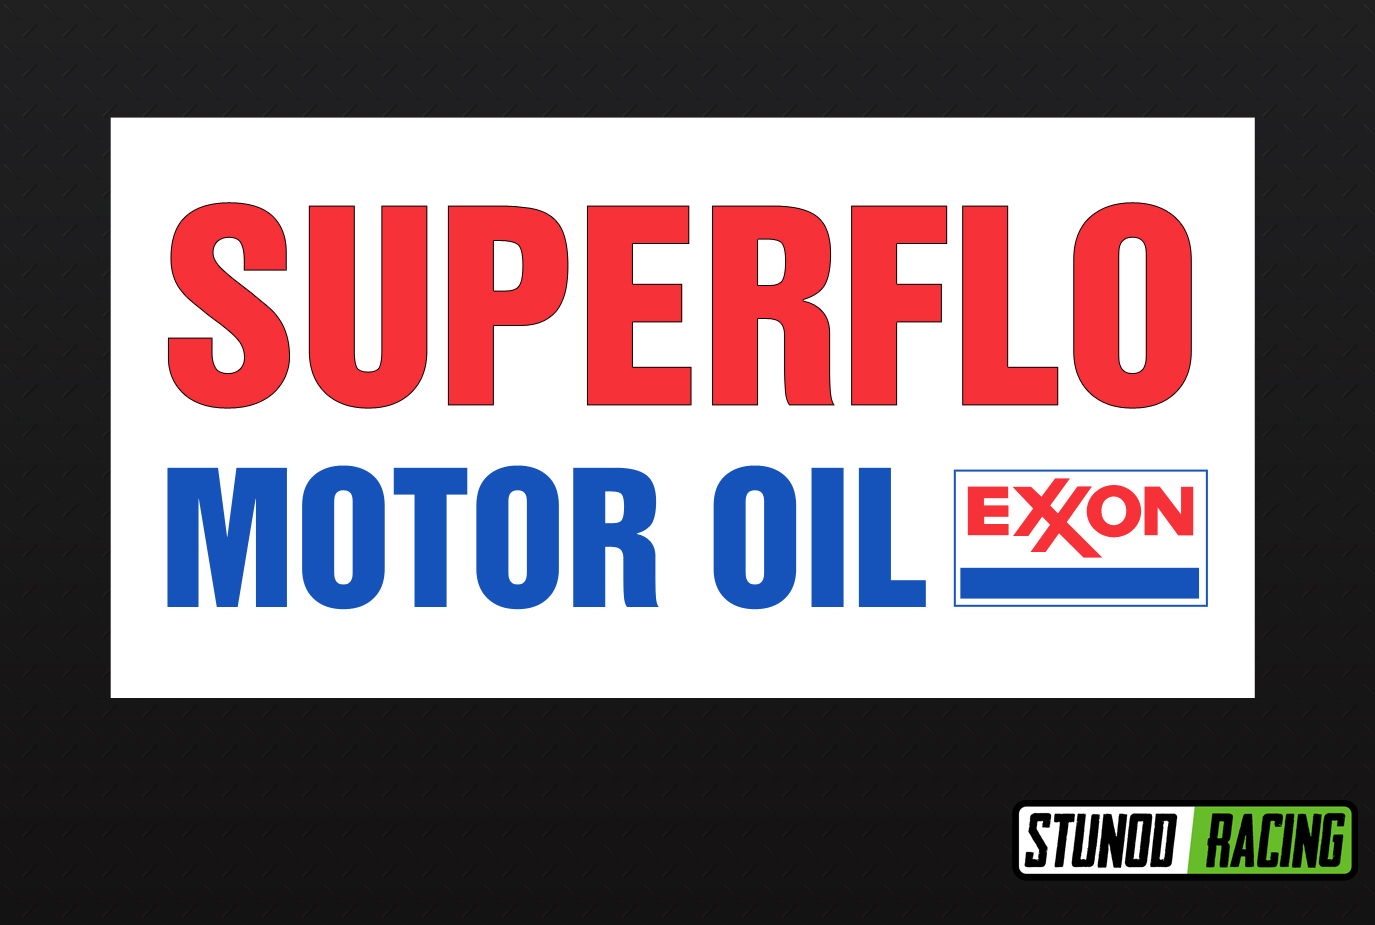 StunodRacing_Superflo-Motor-Oil_Logo.jpg